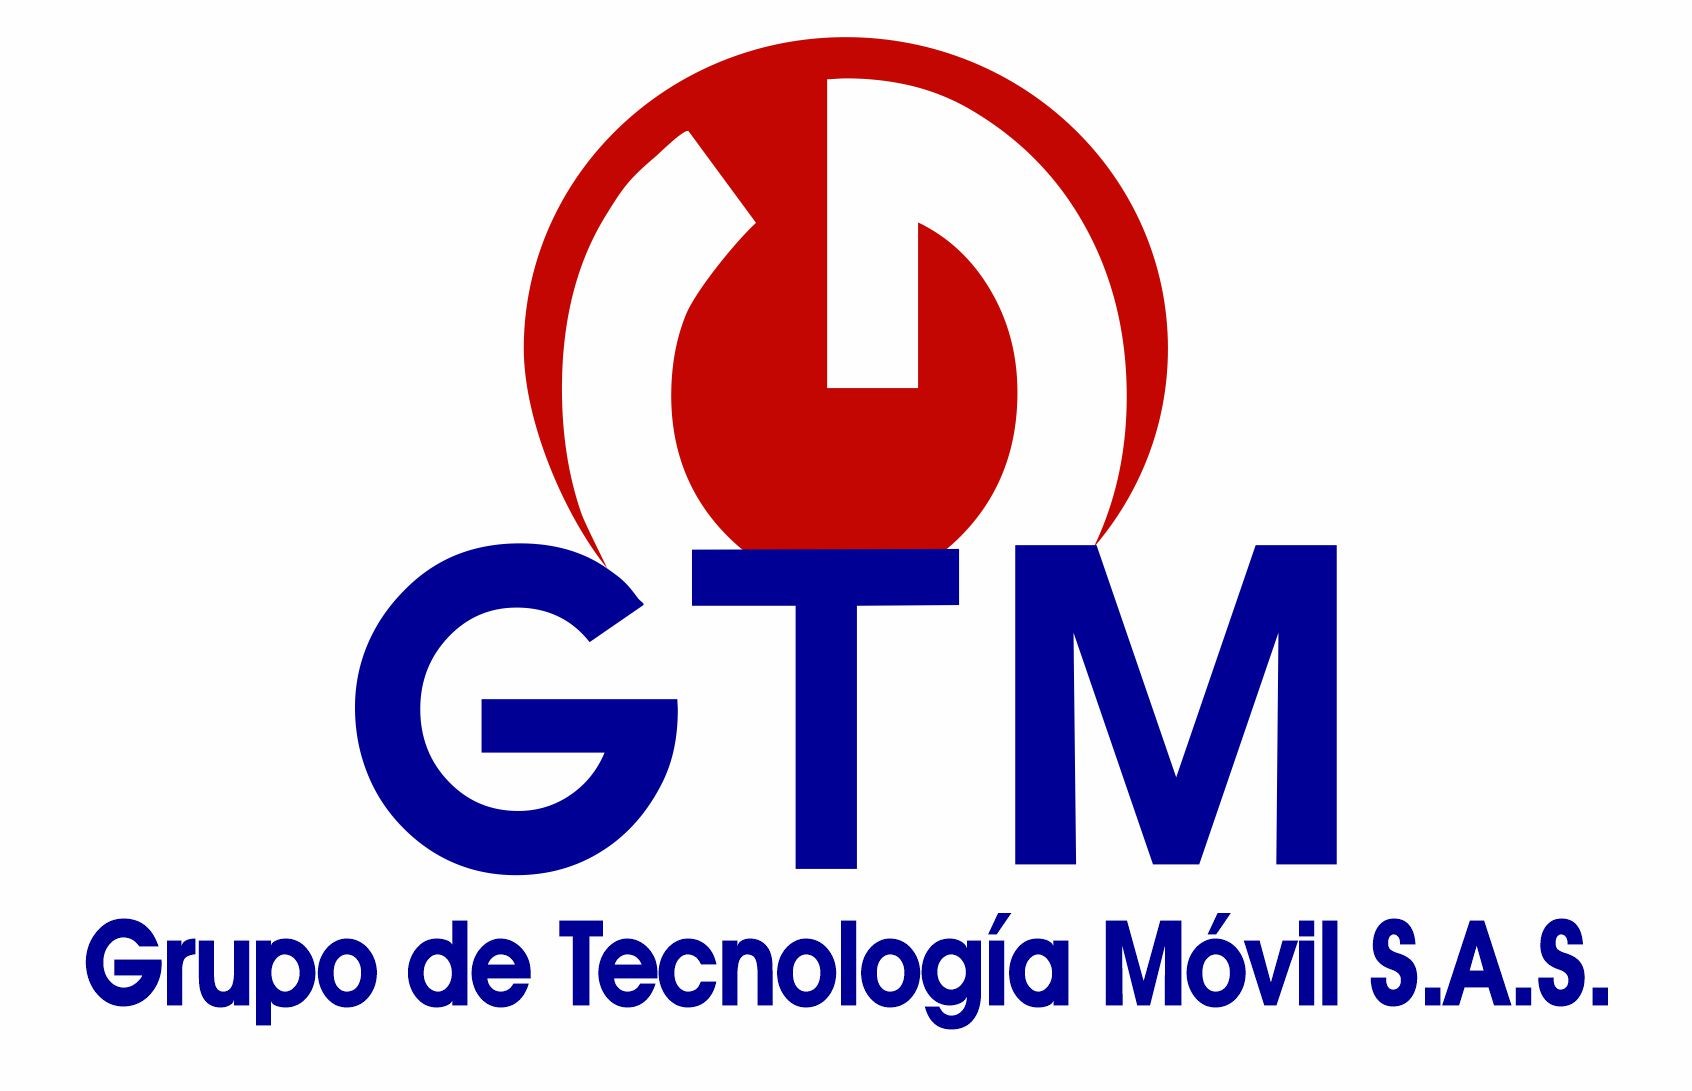 Grupo de Tecnologia Movil S.A.S  GTM